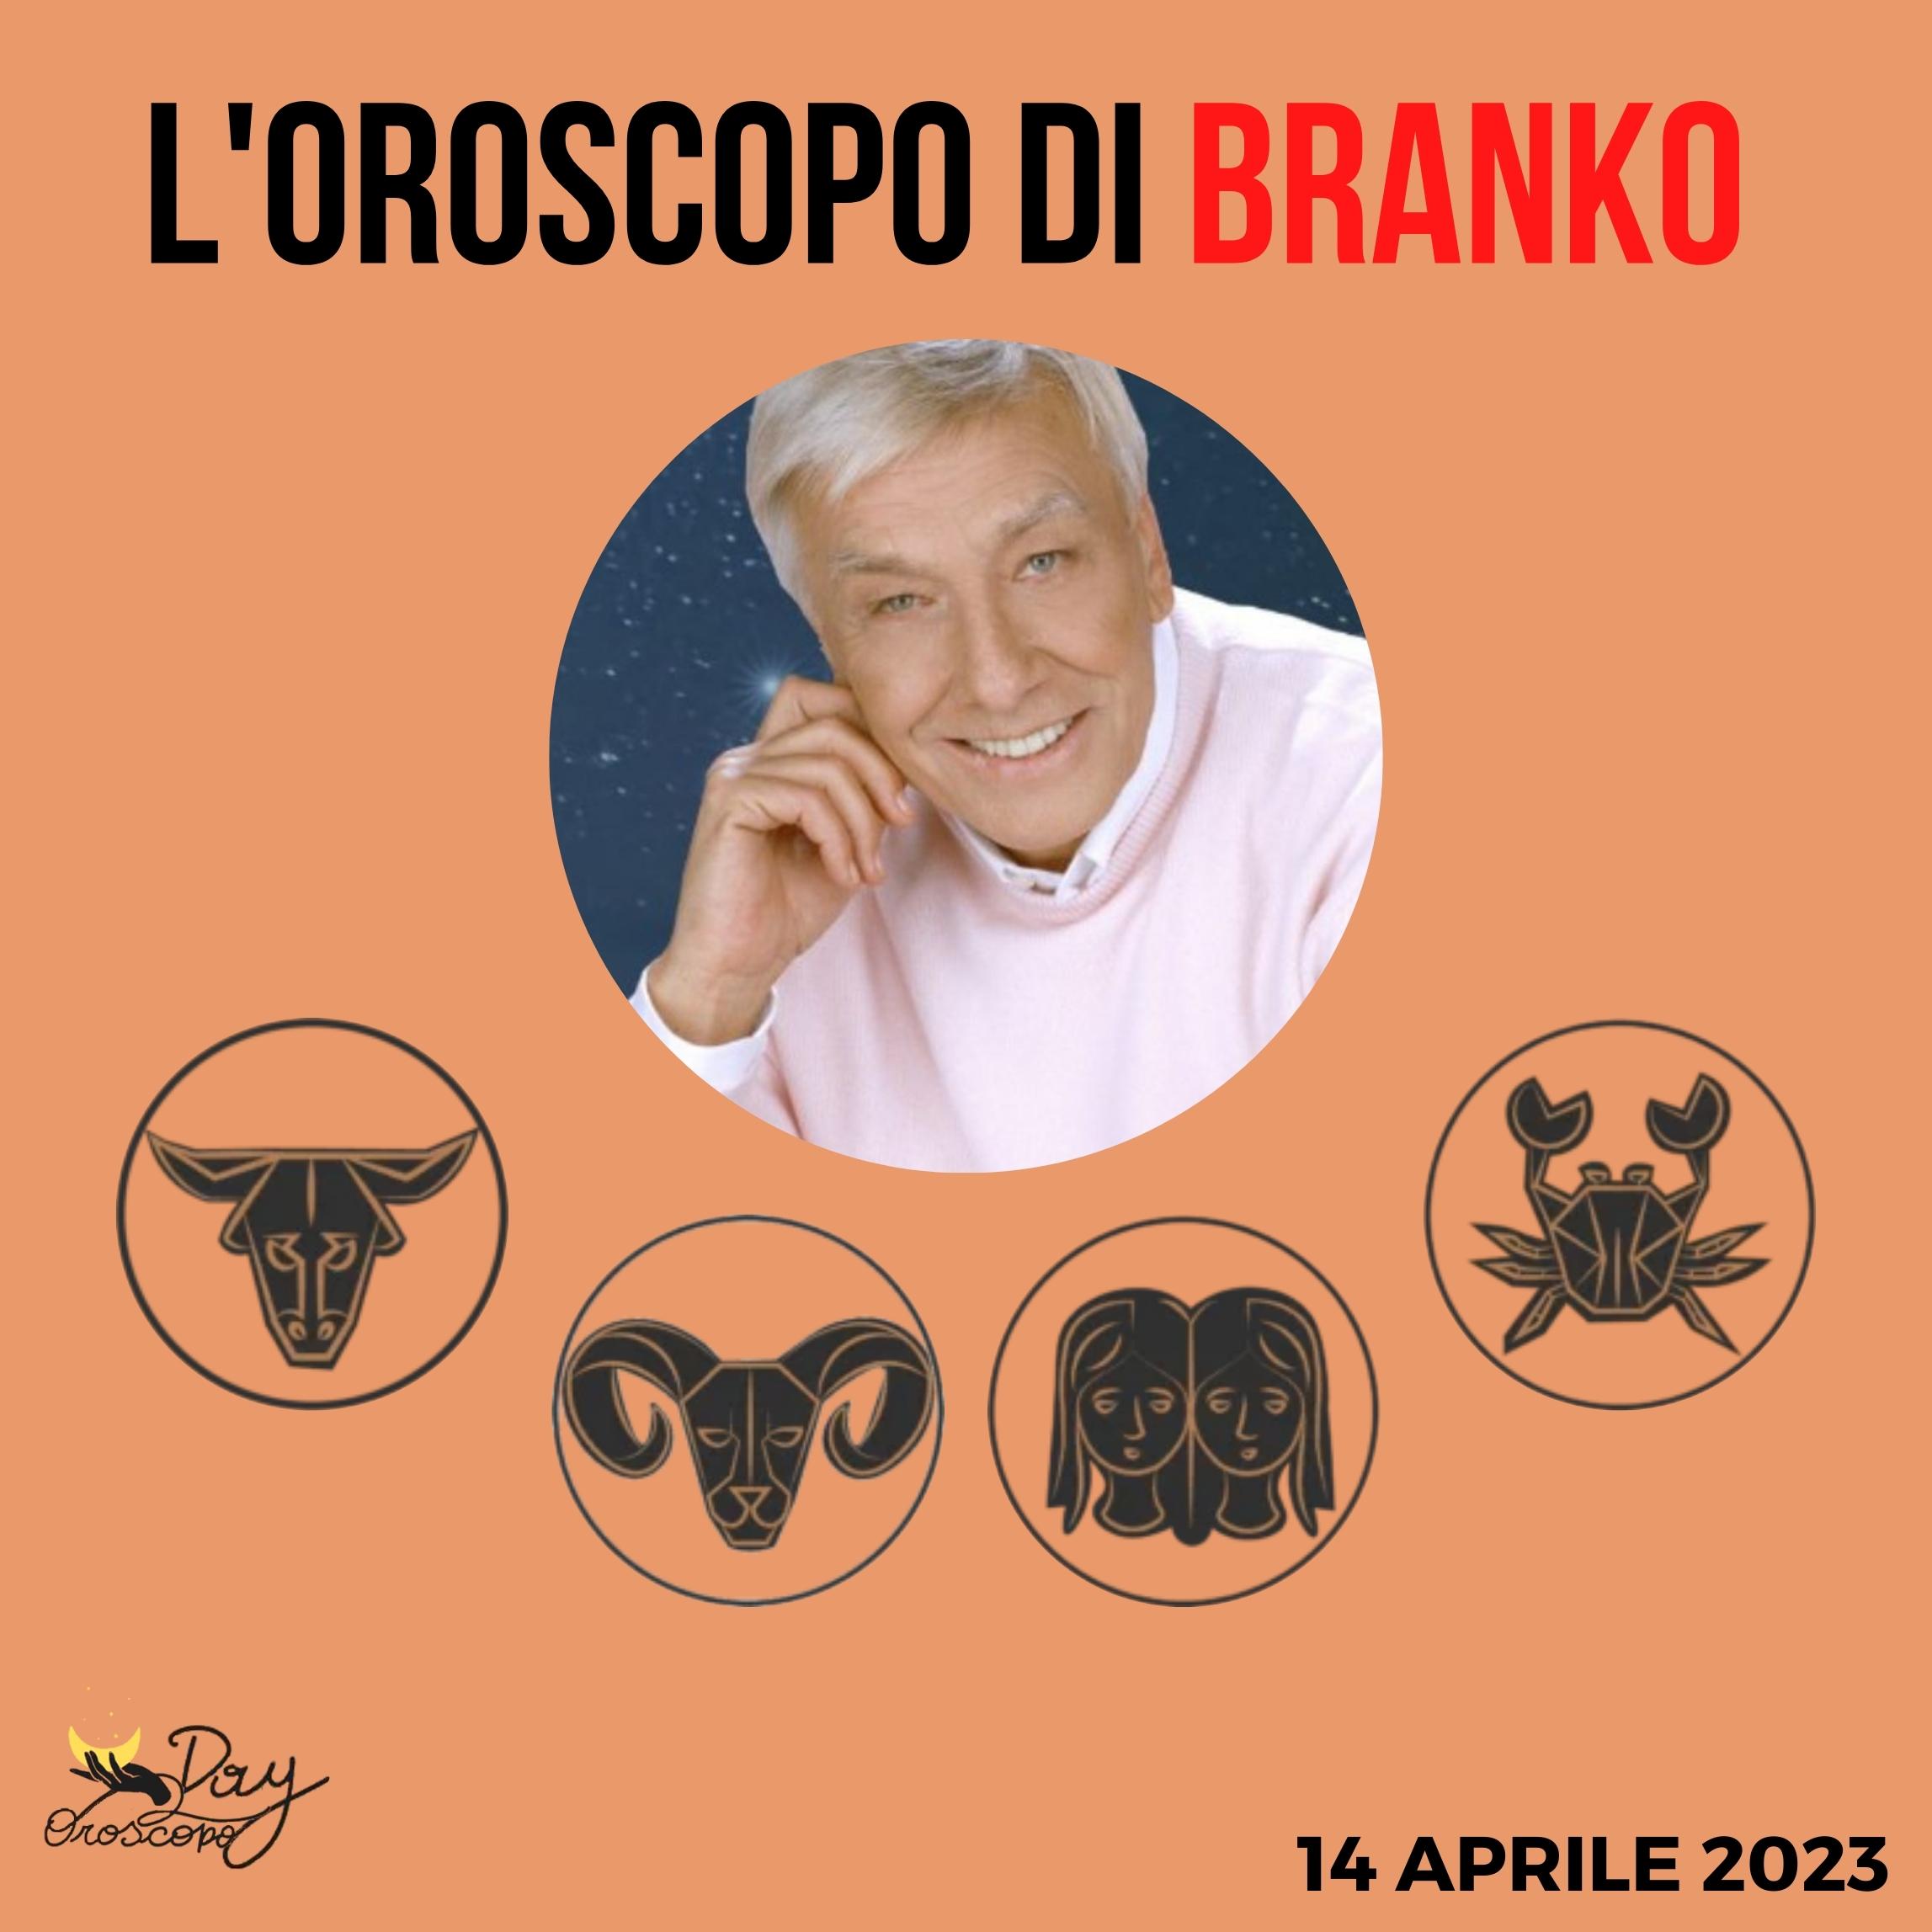 Oroscopo Branko oggi 14 aprile 2023 Toro Ariete Gemelli Cancro